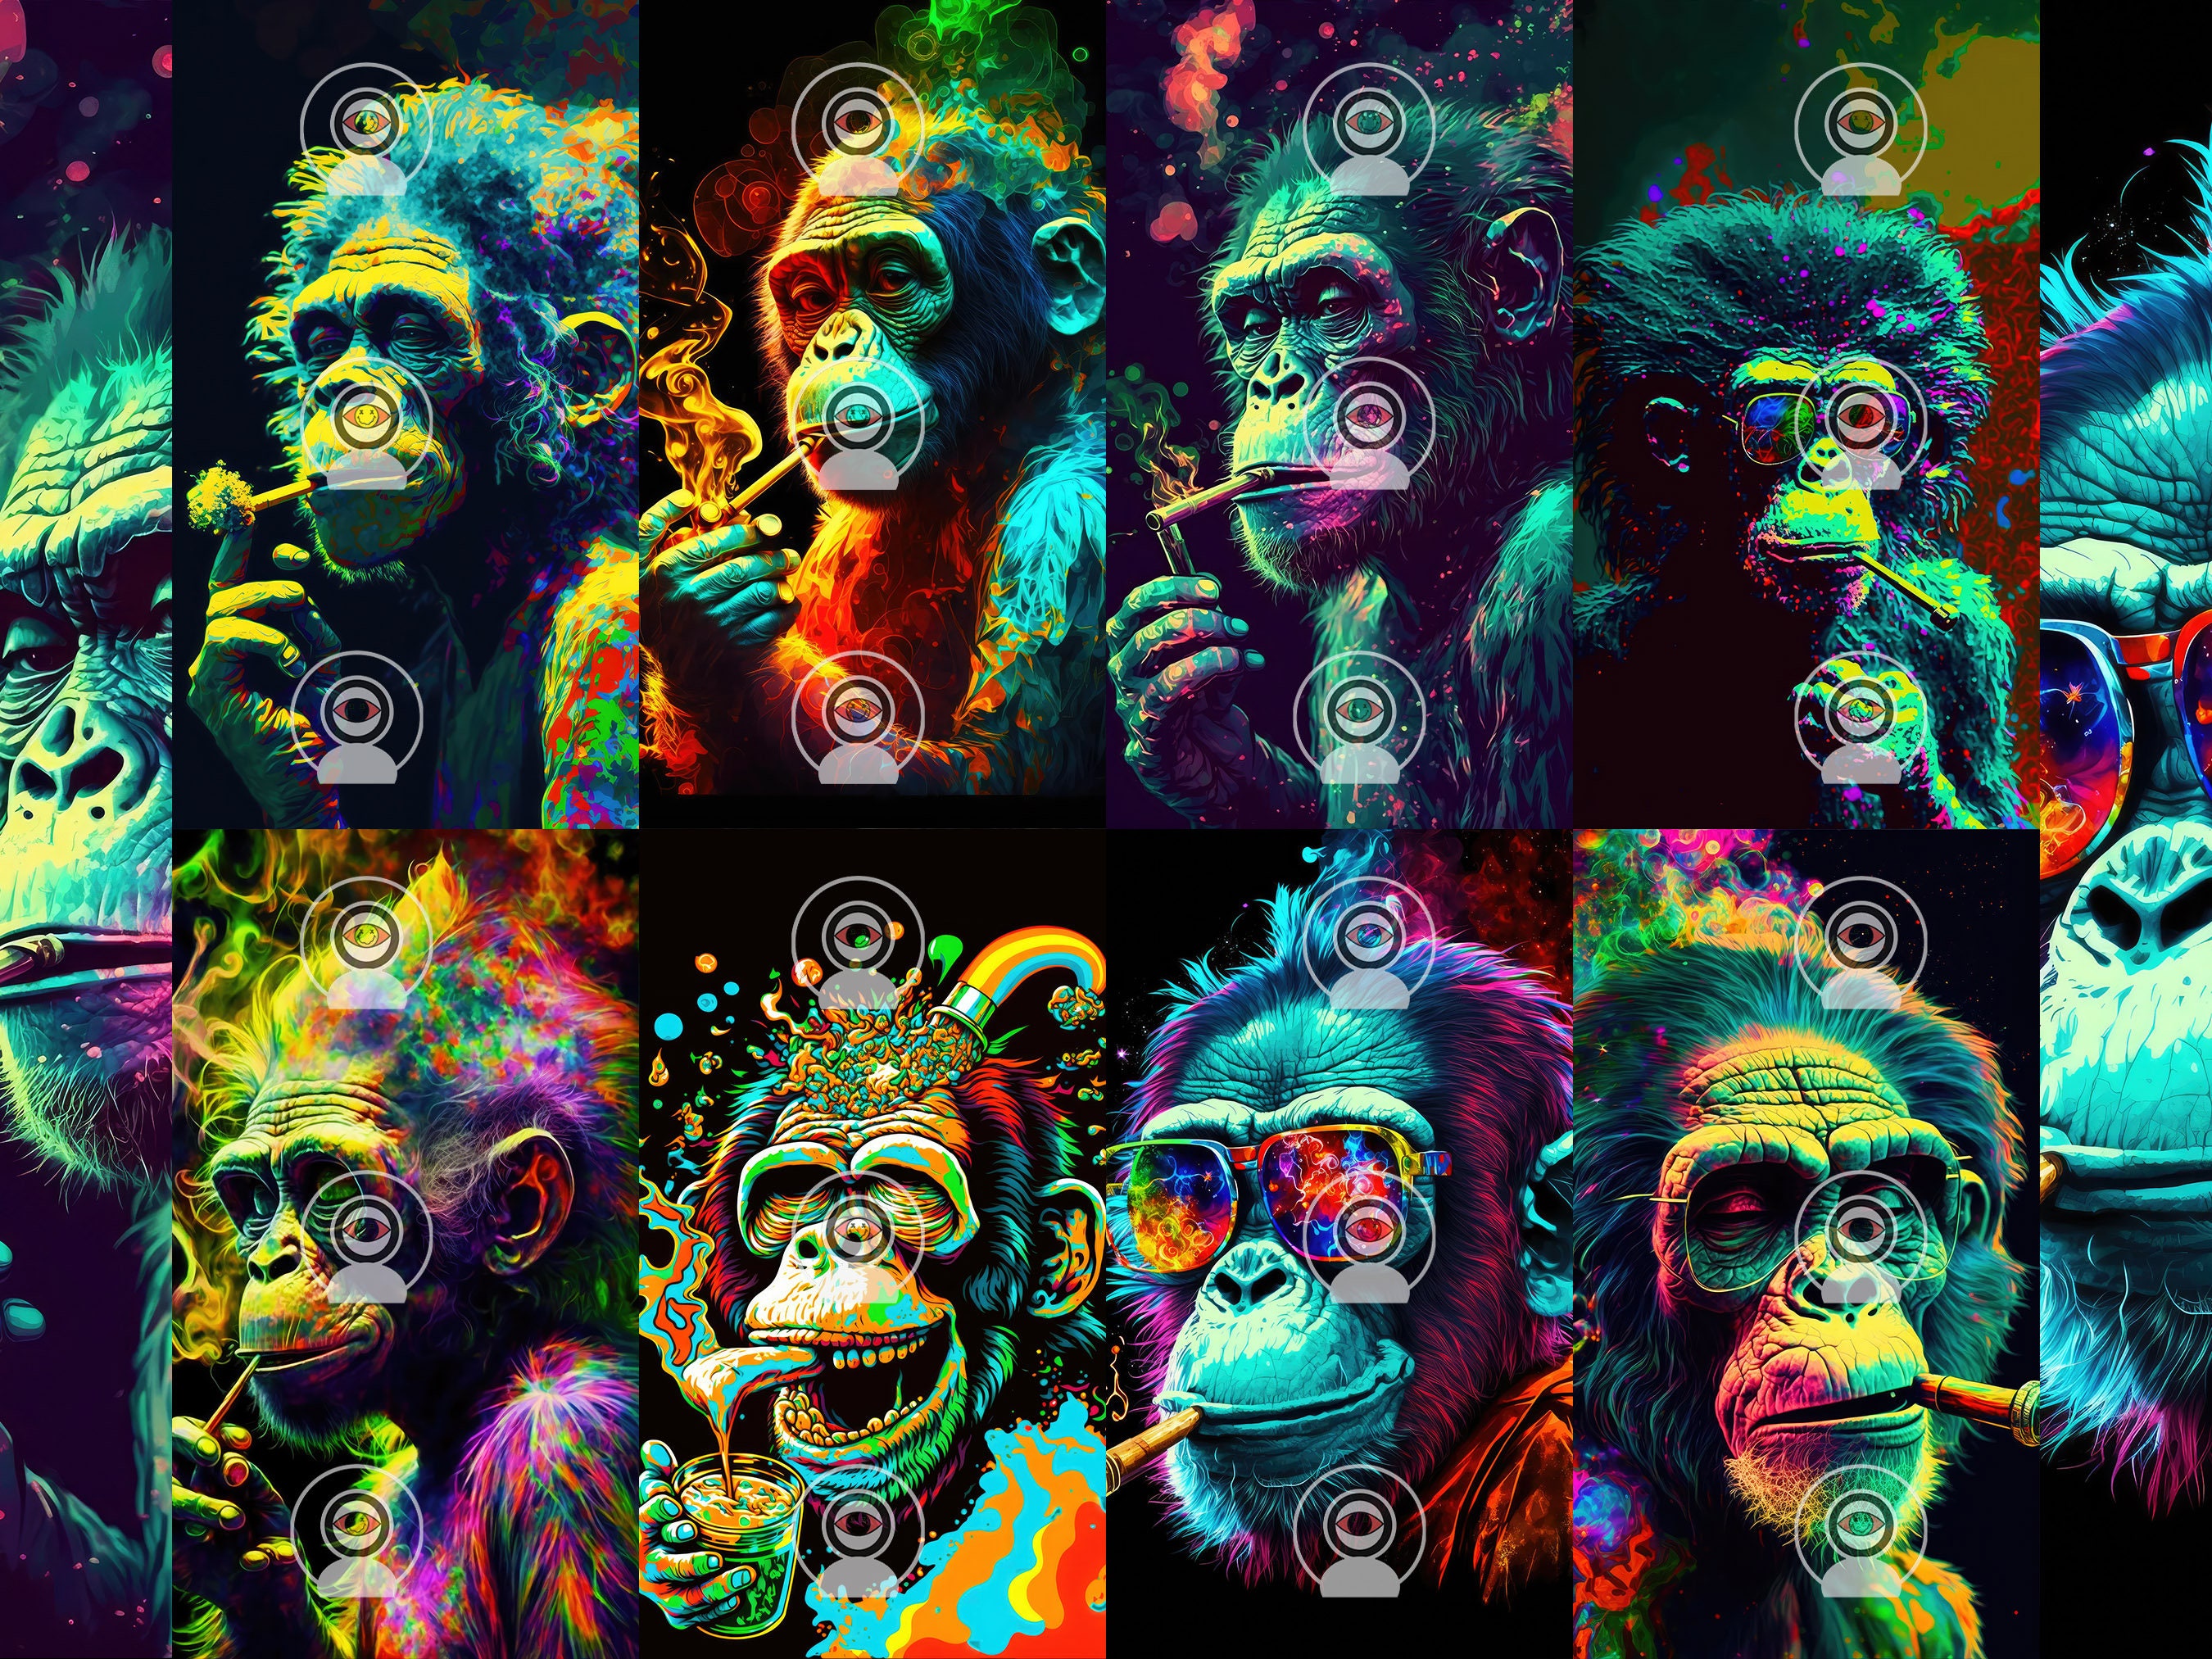 Cute Monkey Wallpaper Images  Free Download on Freepik